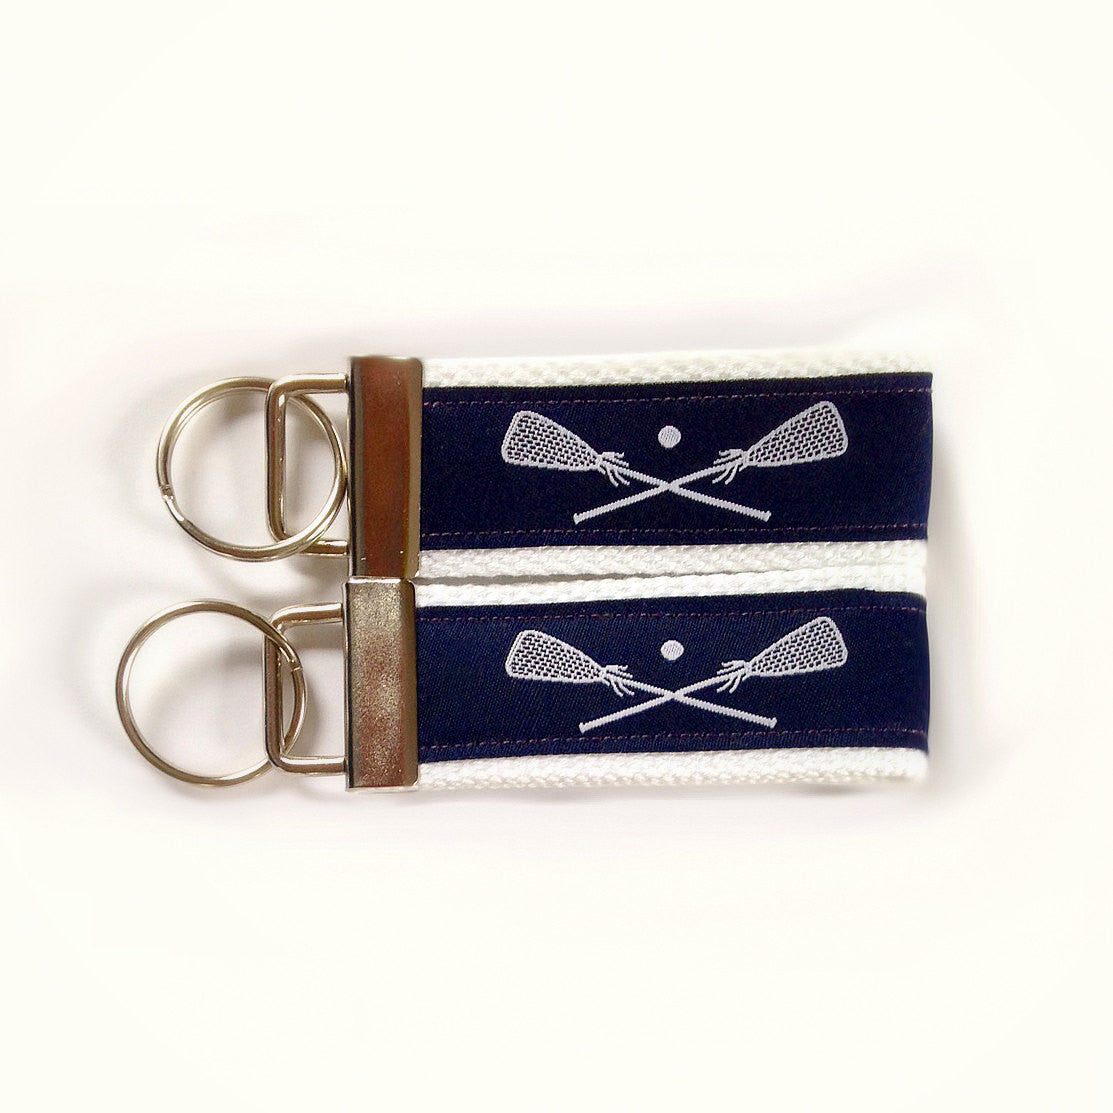 Key Fob (Medium): Navy Blue and White LAX Lacrosse Themed Key Fob Key Chain